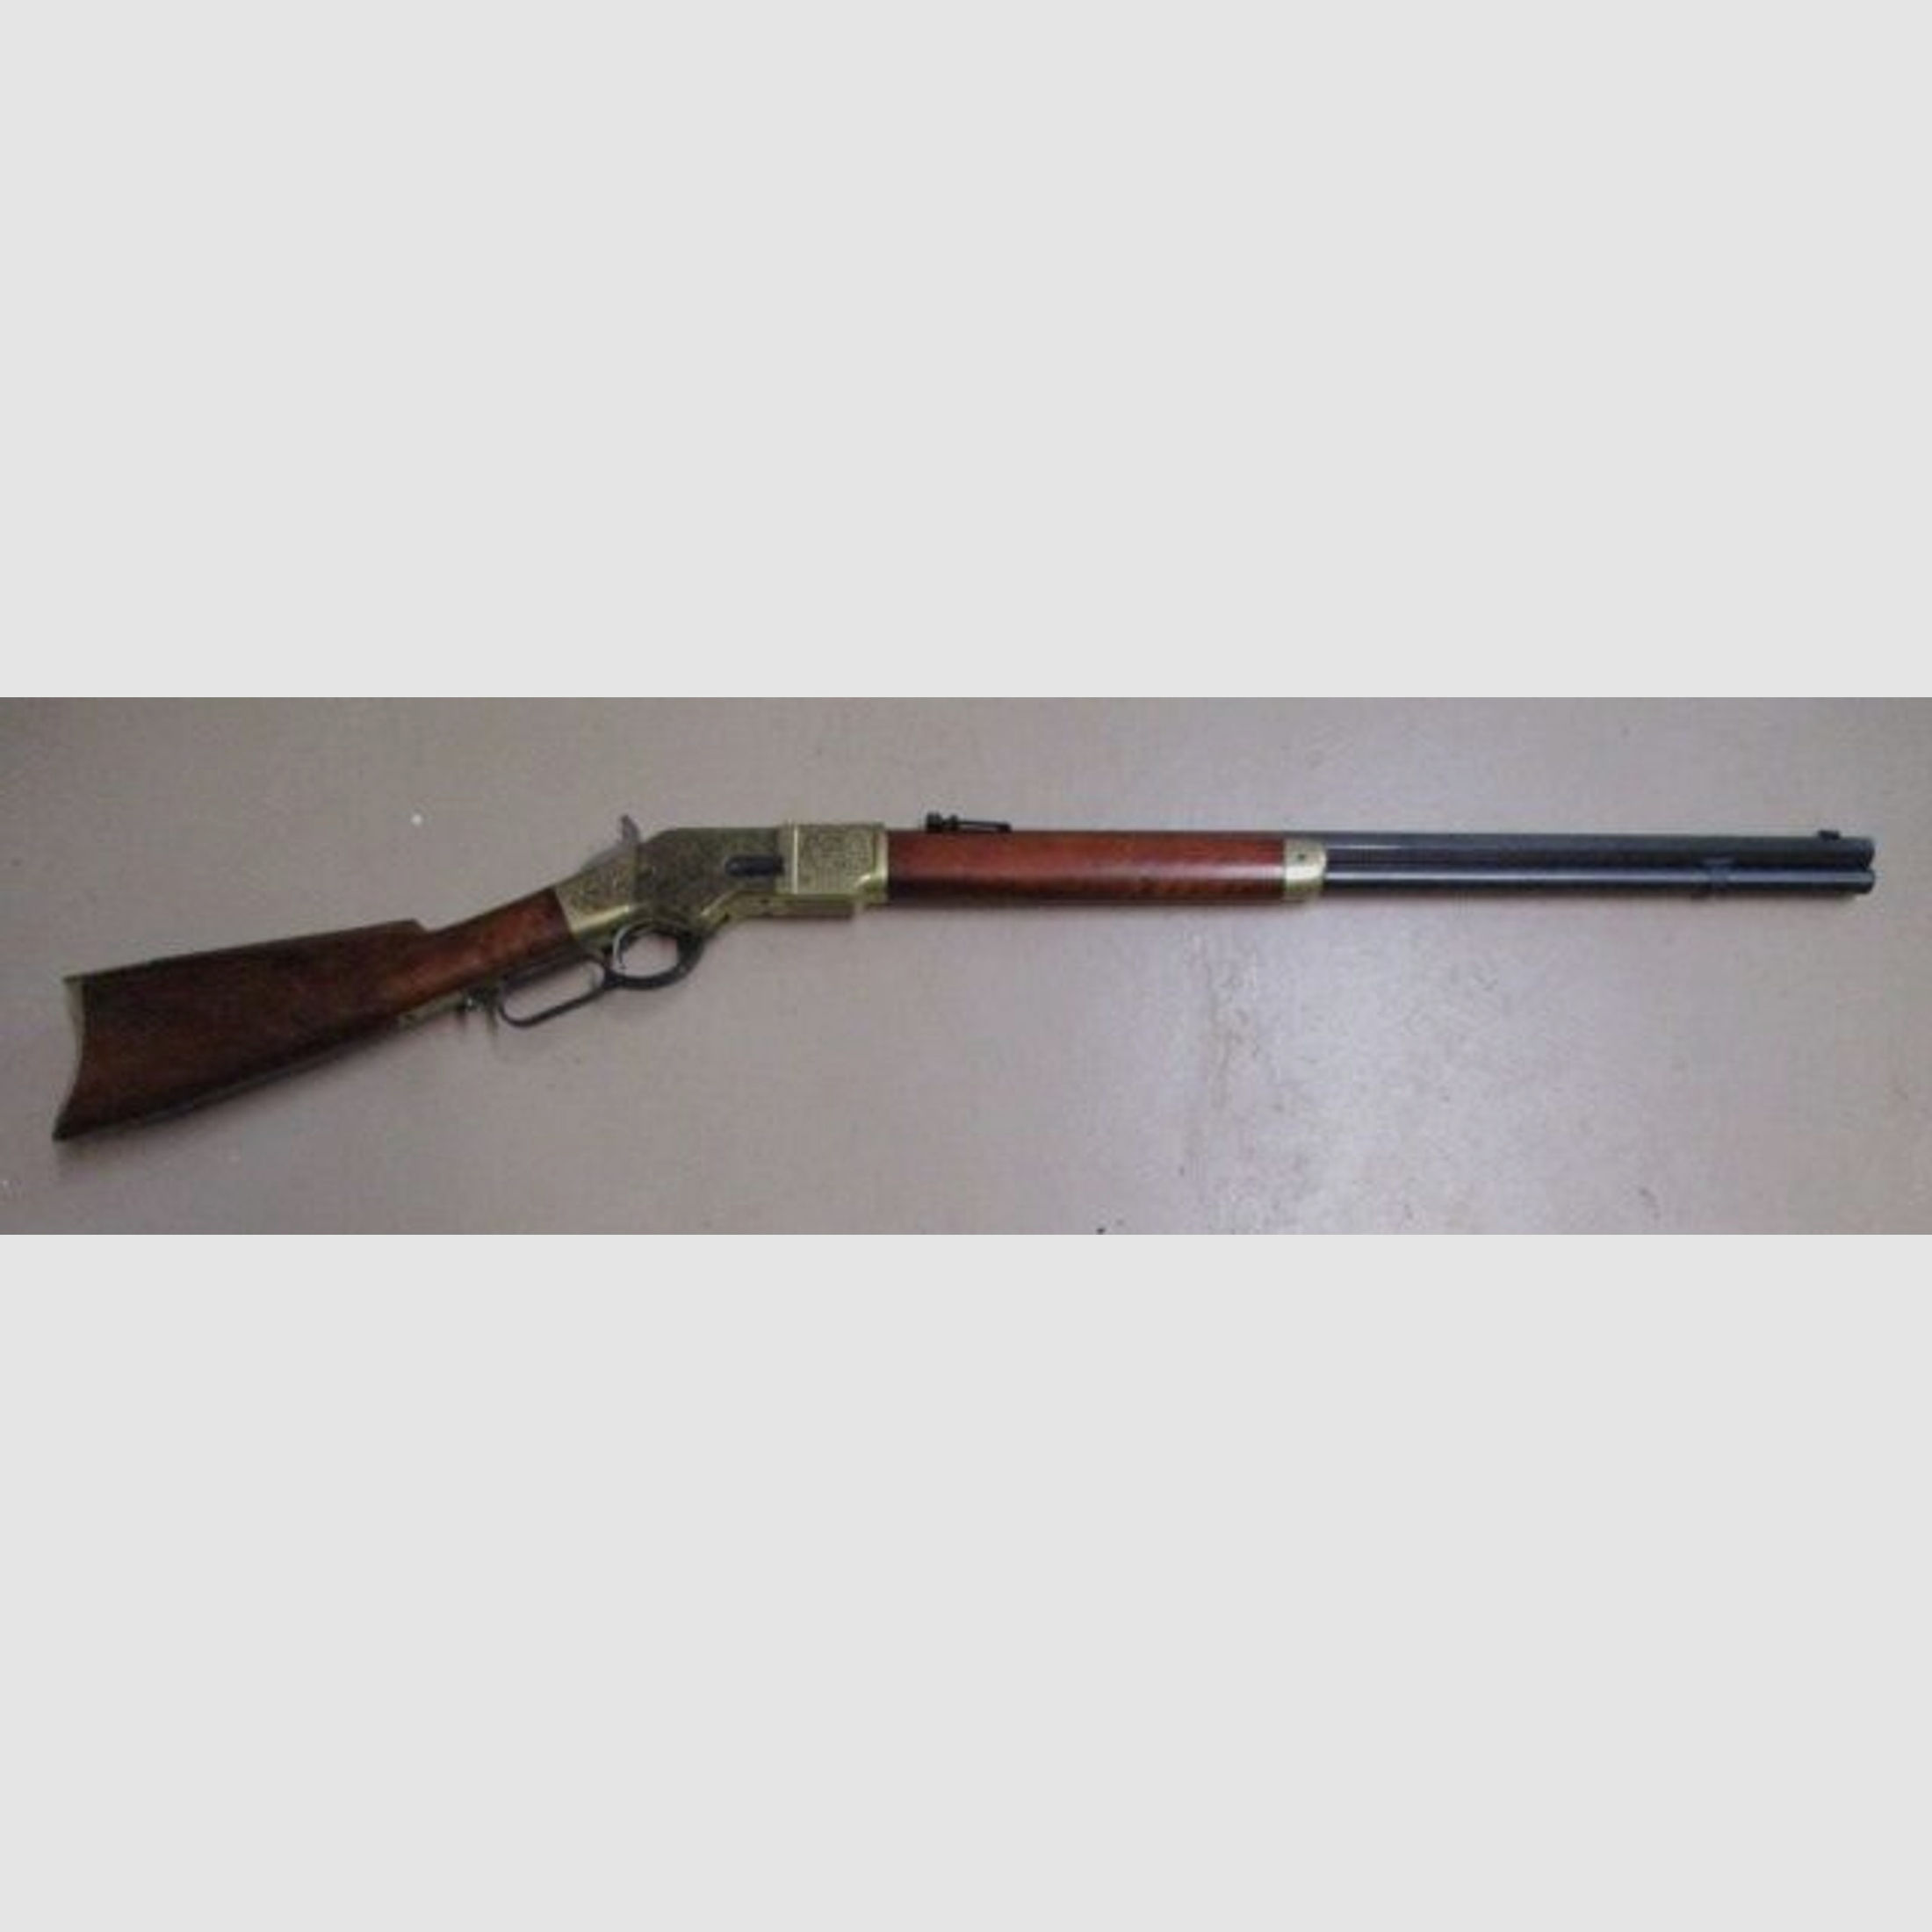 Unterhebelrepetierbüchse Hege-Uberti 1866 Sporting Rifle	 66